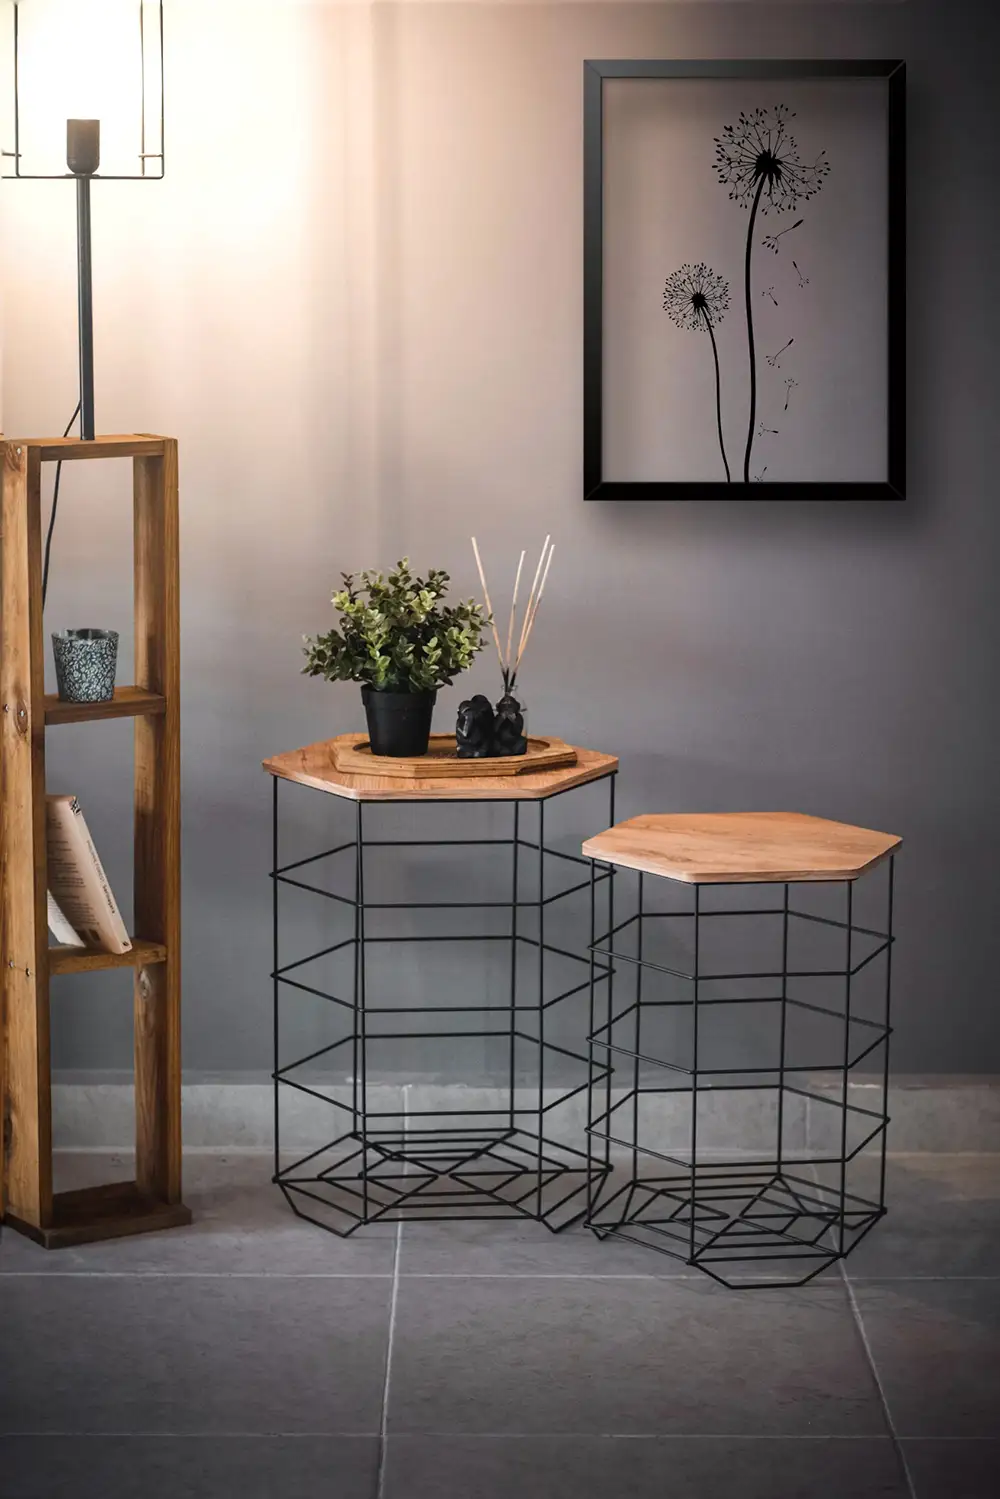 Hexagonal Double Coffee Table With Metal Basket - Thumbnail